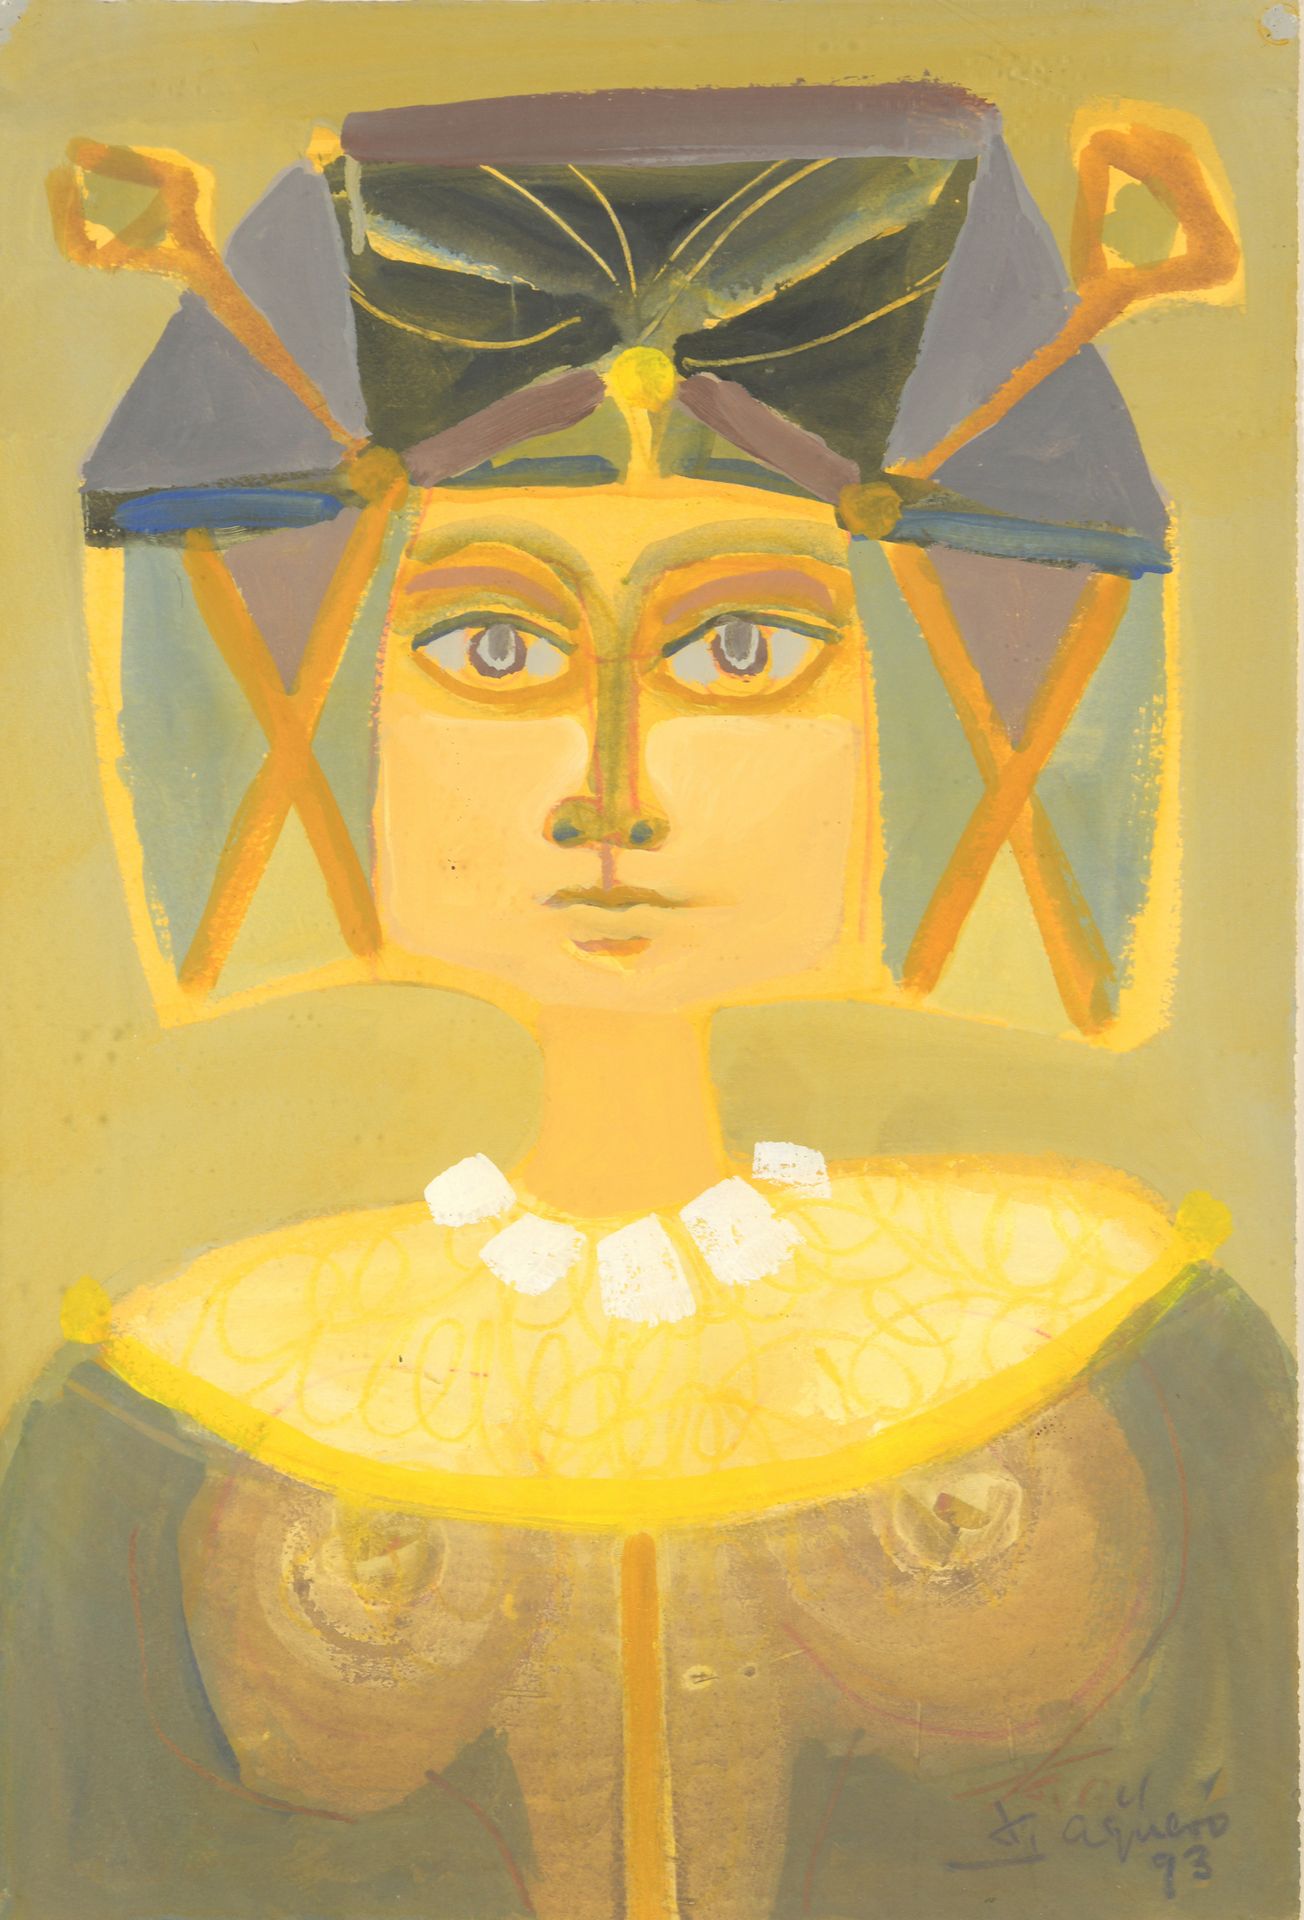 LeopoldoTORRES AGÜERO (1924-1995) Egyptian portrait, 1993


Gouache on paper. 

&hellip;